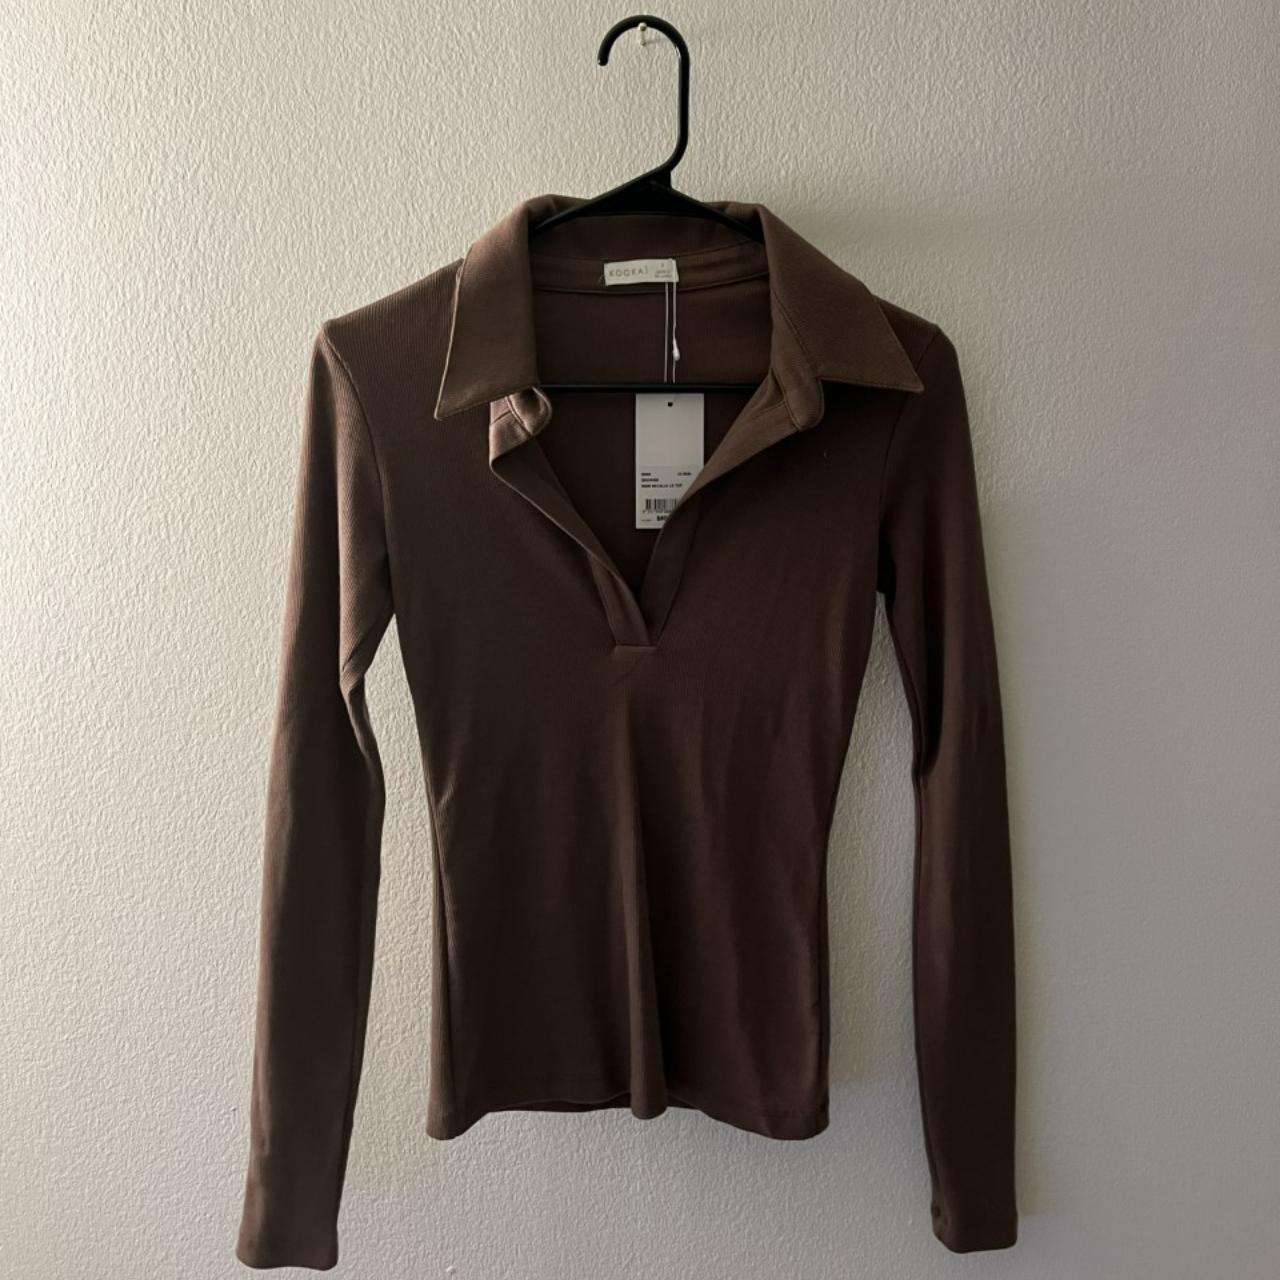 KOOKAÏ Women's Brown Shirt